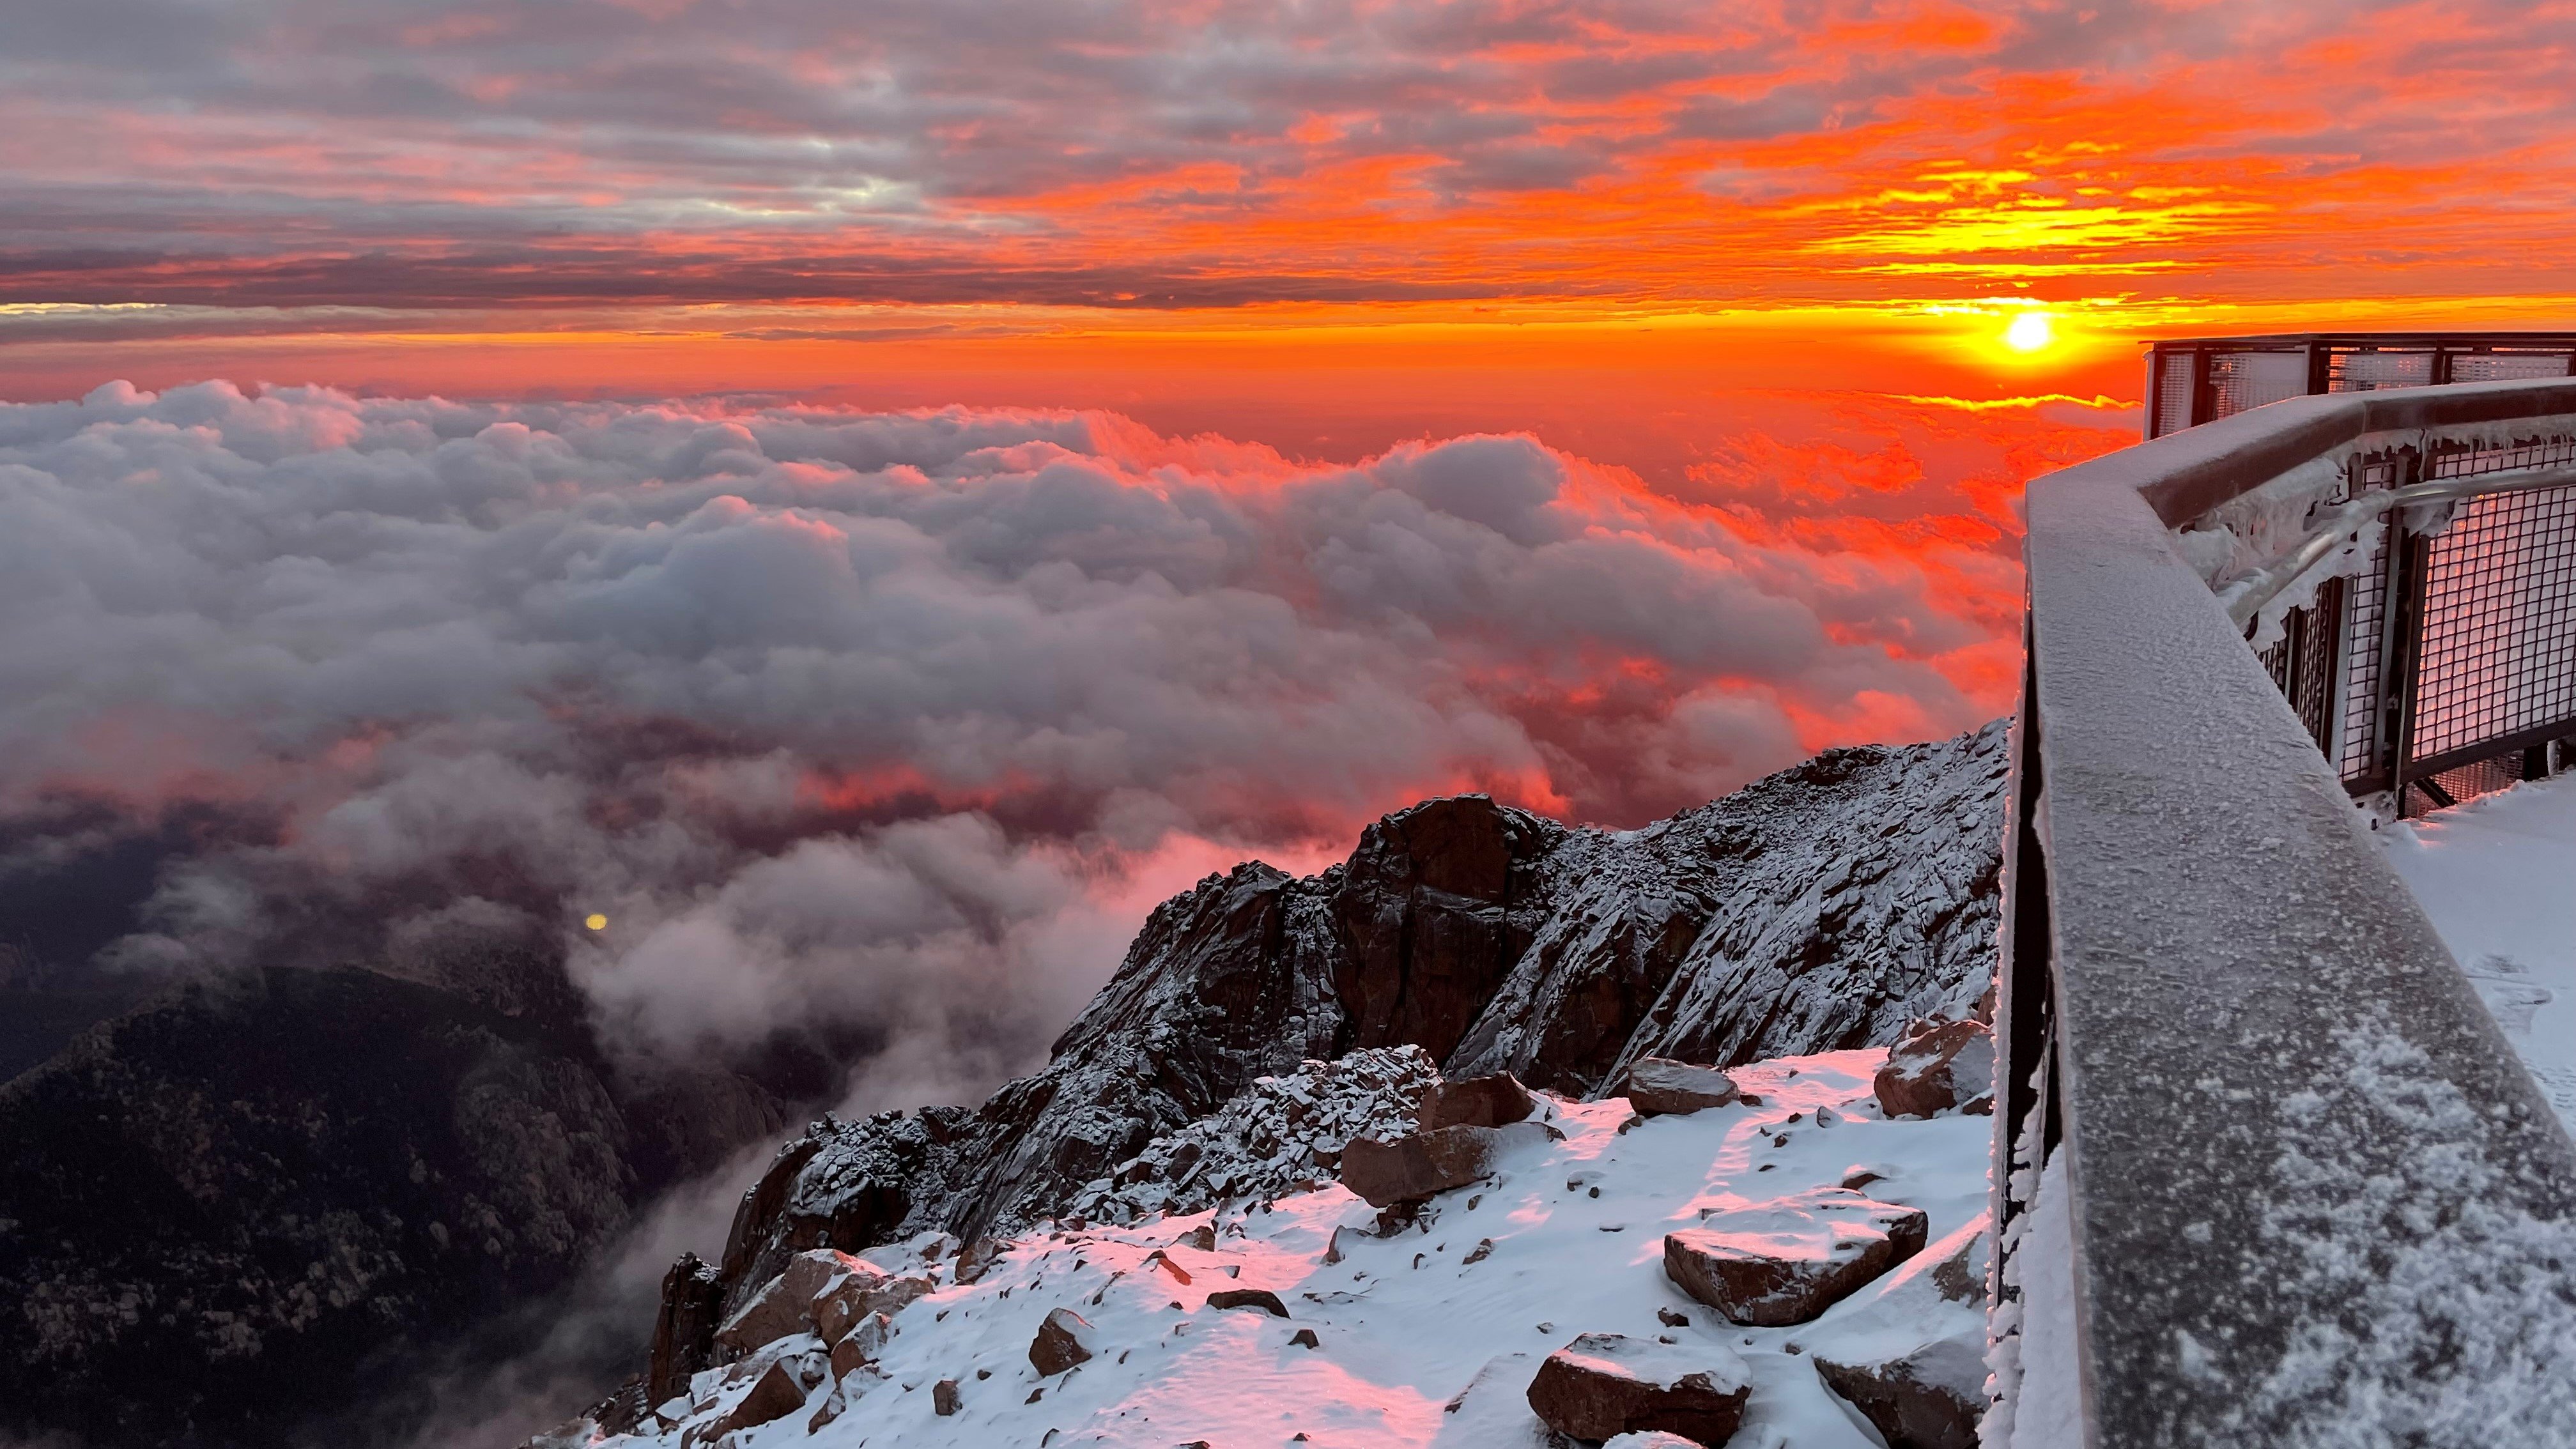 Sunrise from Pikes Peak - June 27th 2021